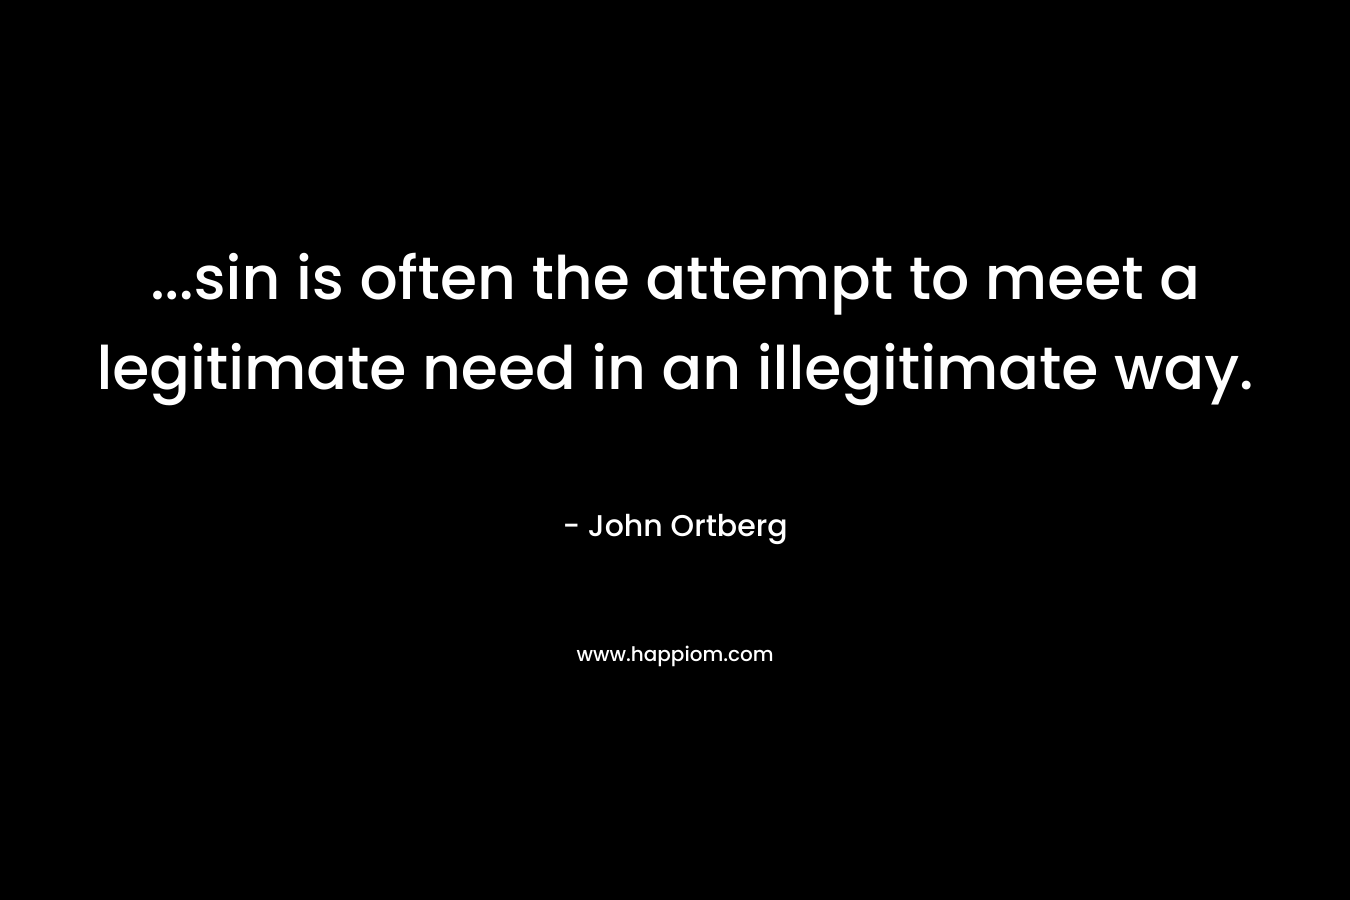 ...sin is often the attempt to meet a legitimate need in an illegitimate way.